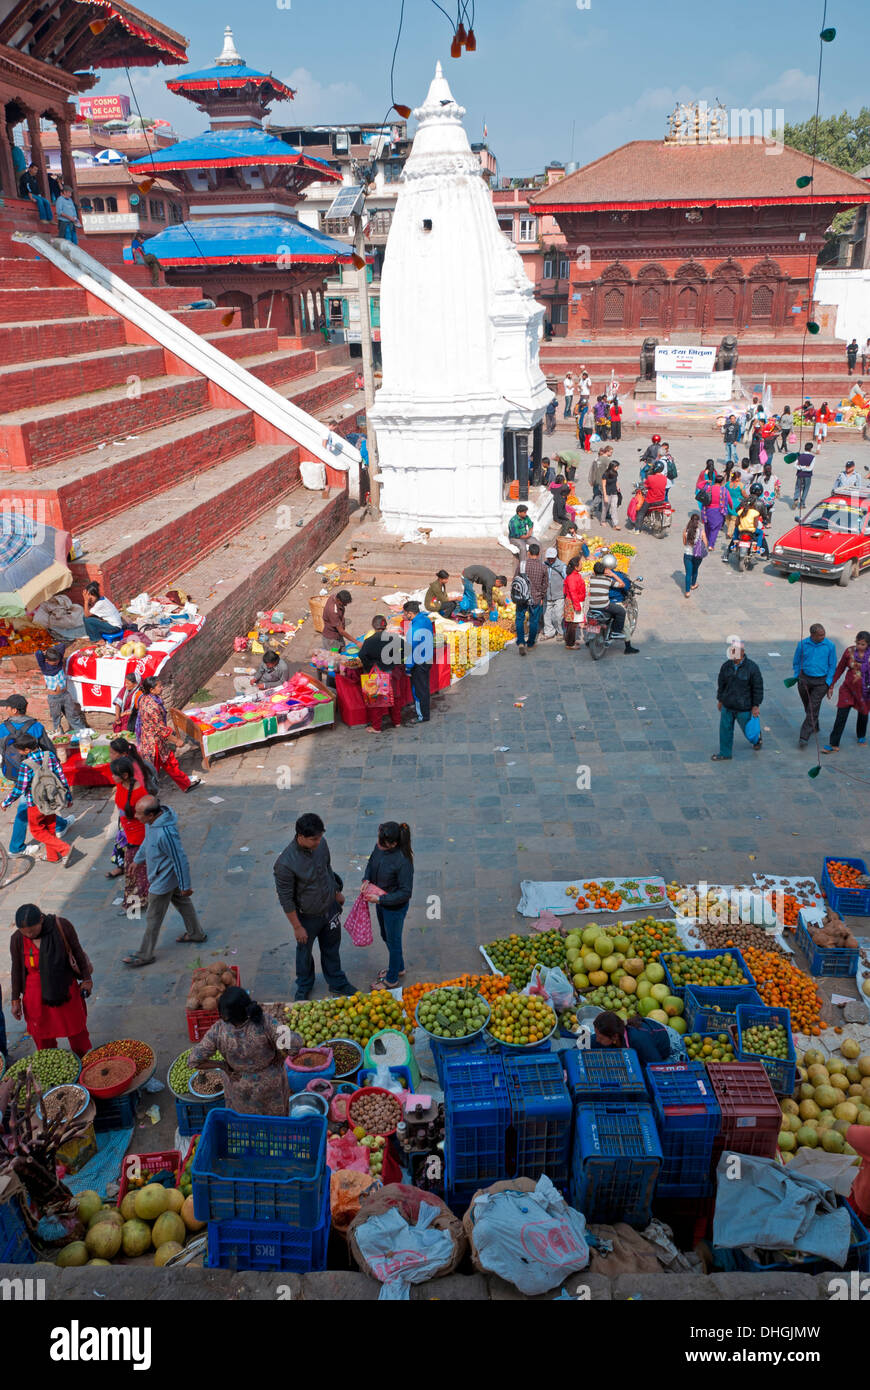 Street market in Kathmandu Durbar Square. Stock Photo